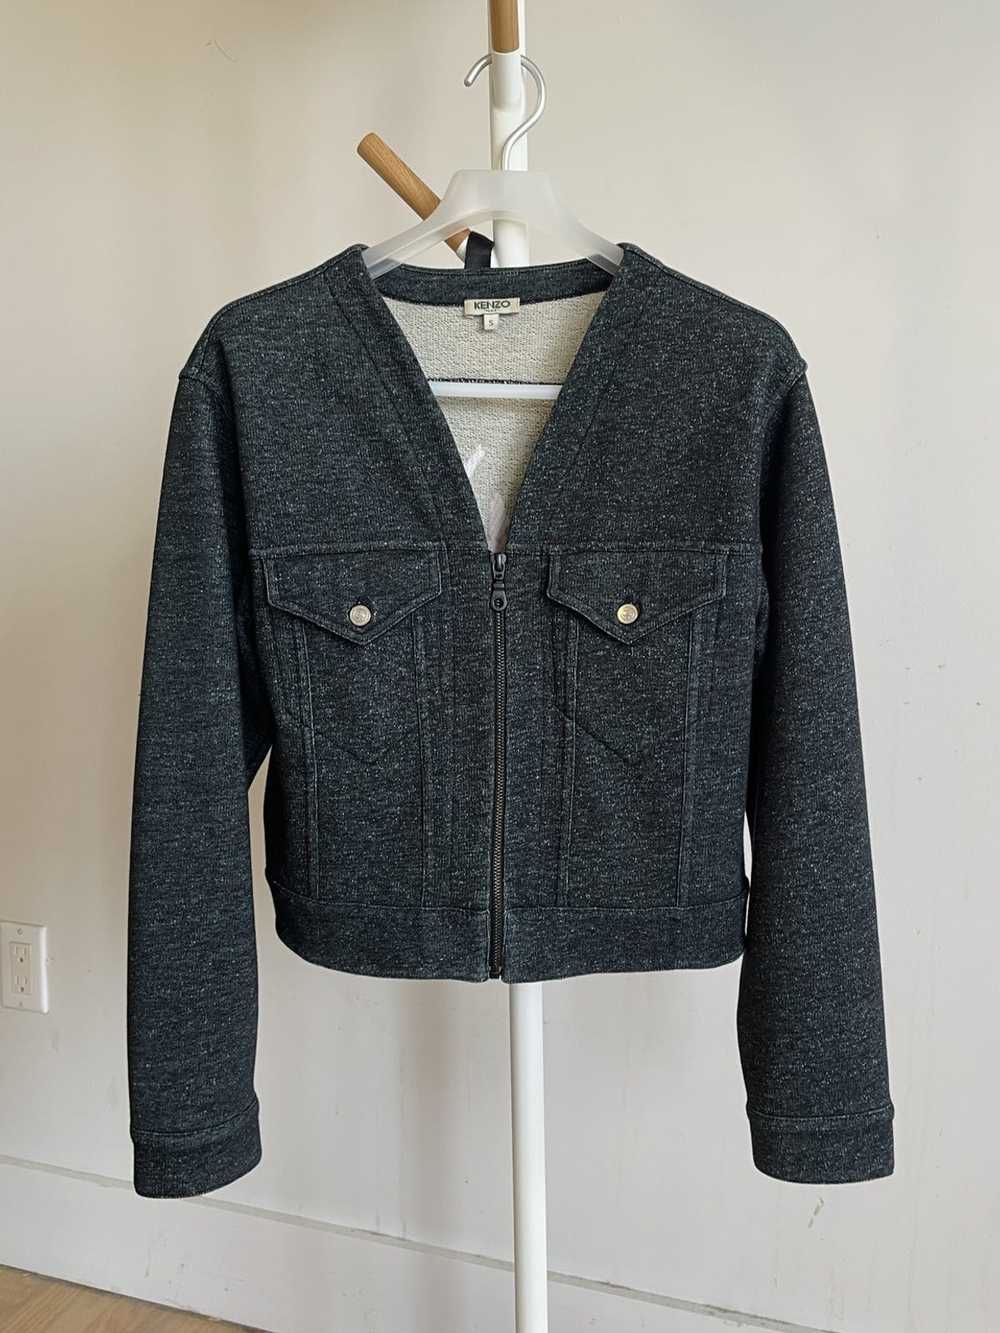 Kenzo Kenzo embroidery knit cropped light jacket - image 2